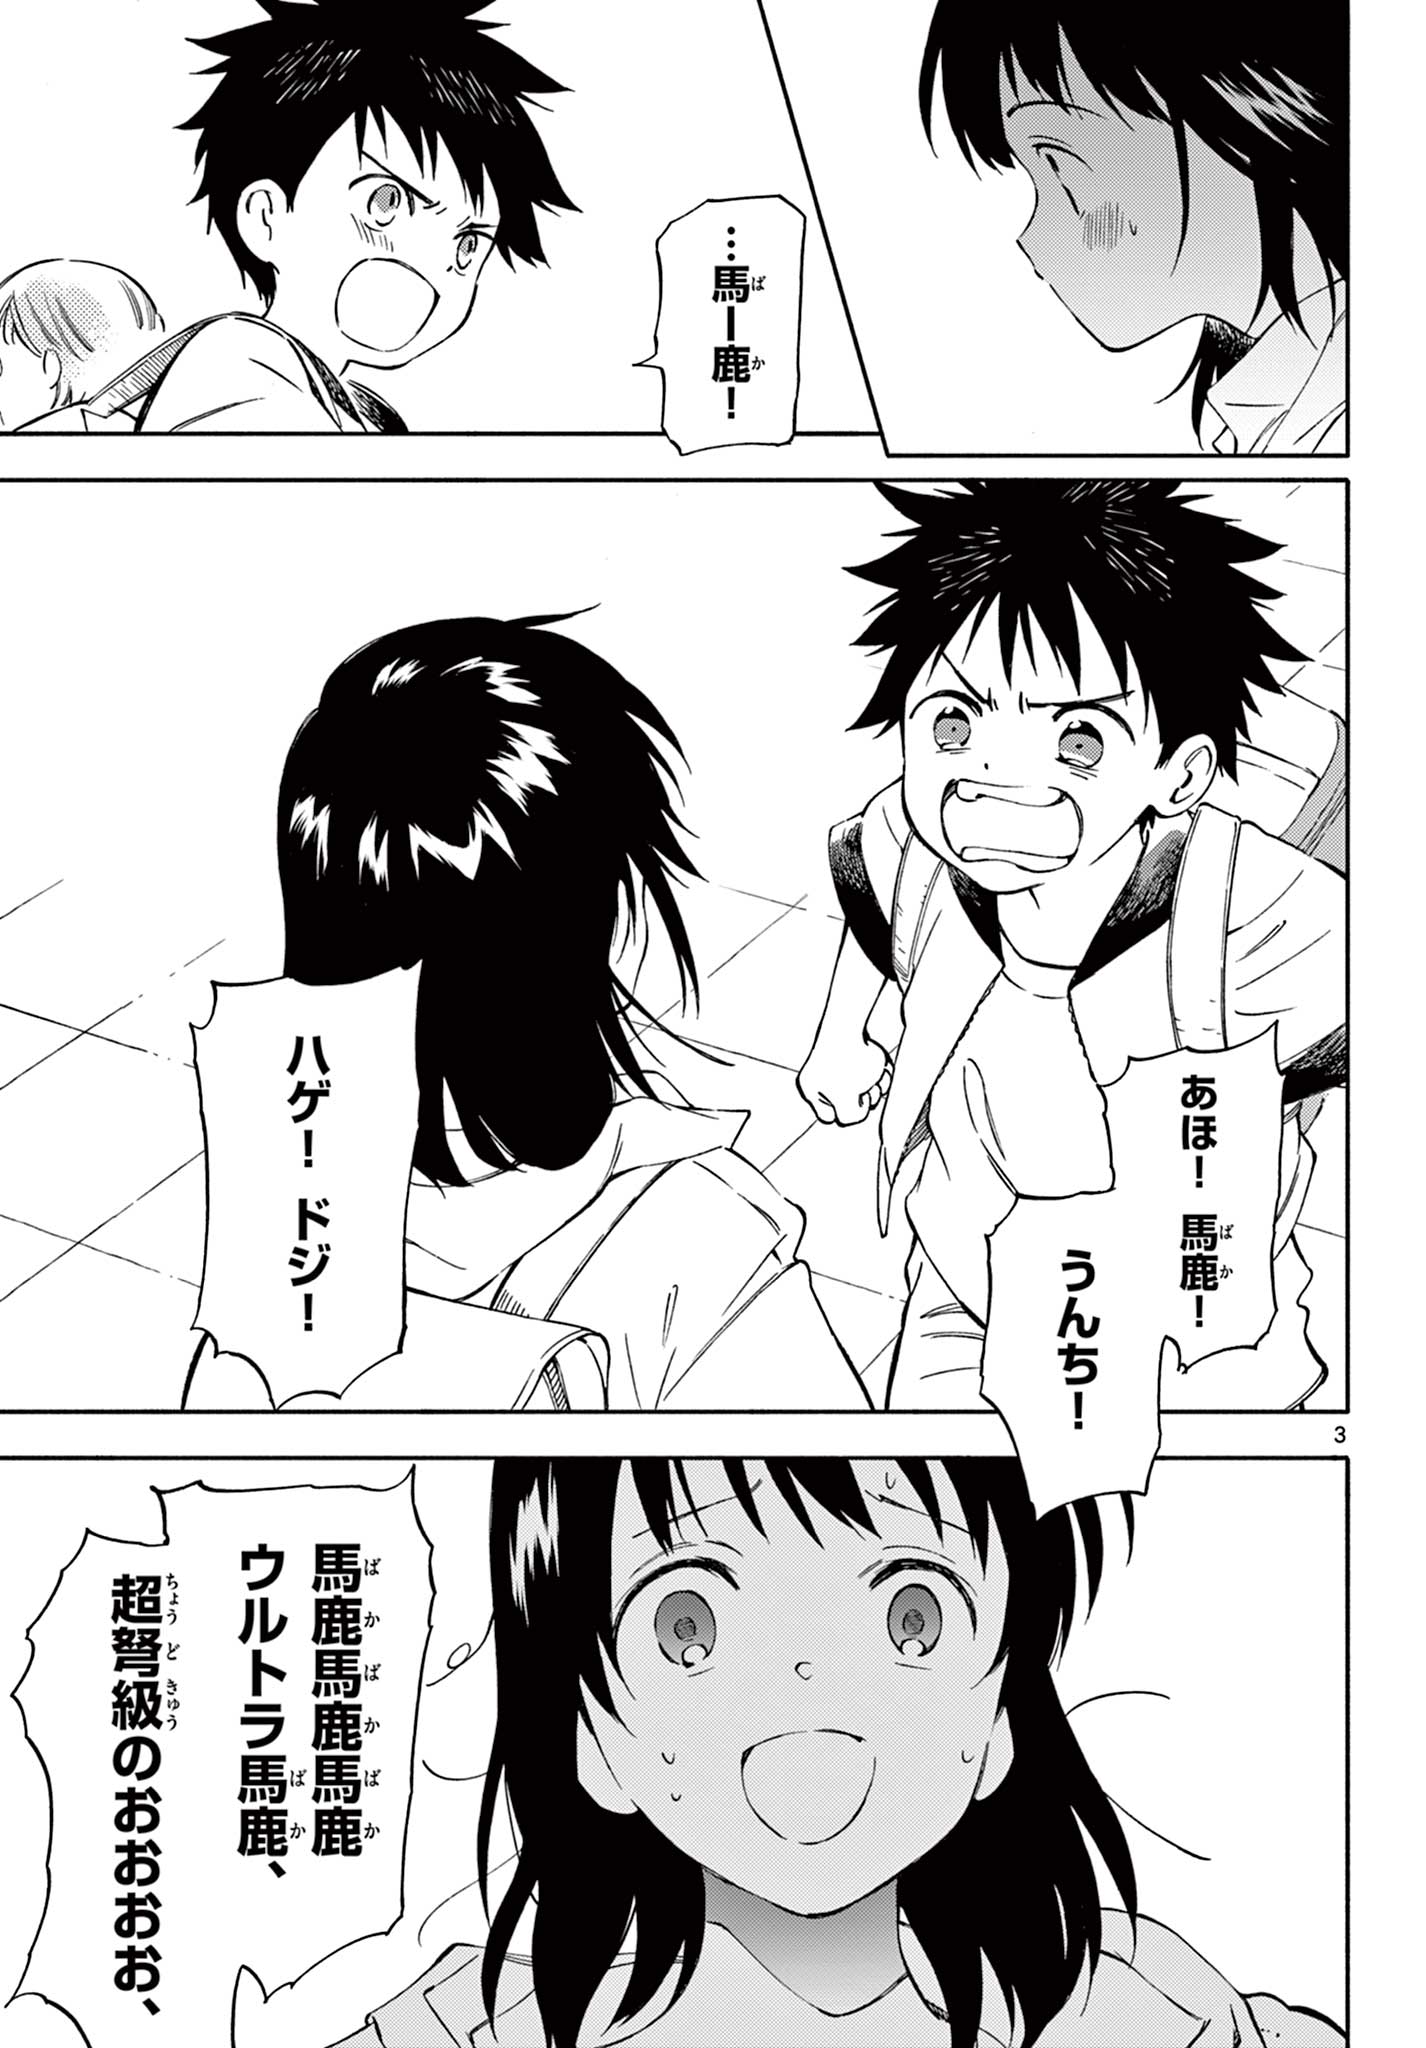 Nami no Shijima no Horizont - Chapter 14.1 - Page 3